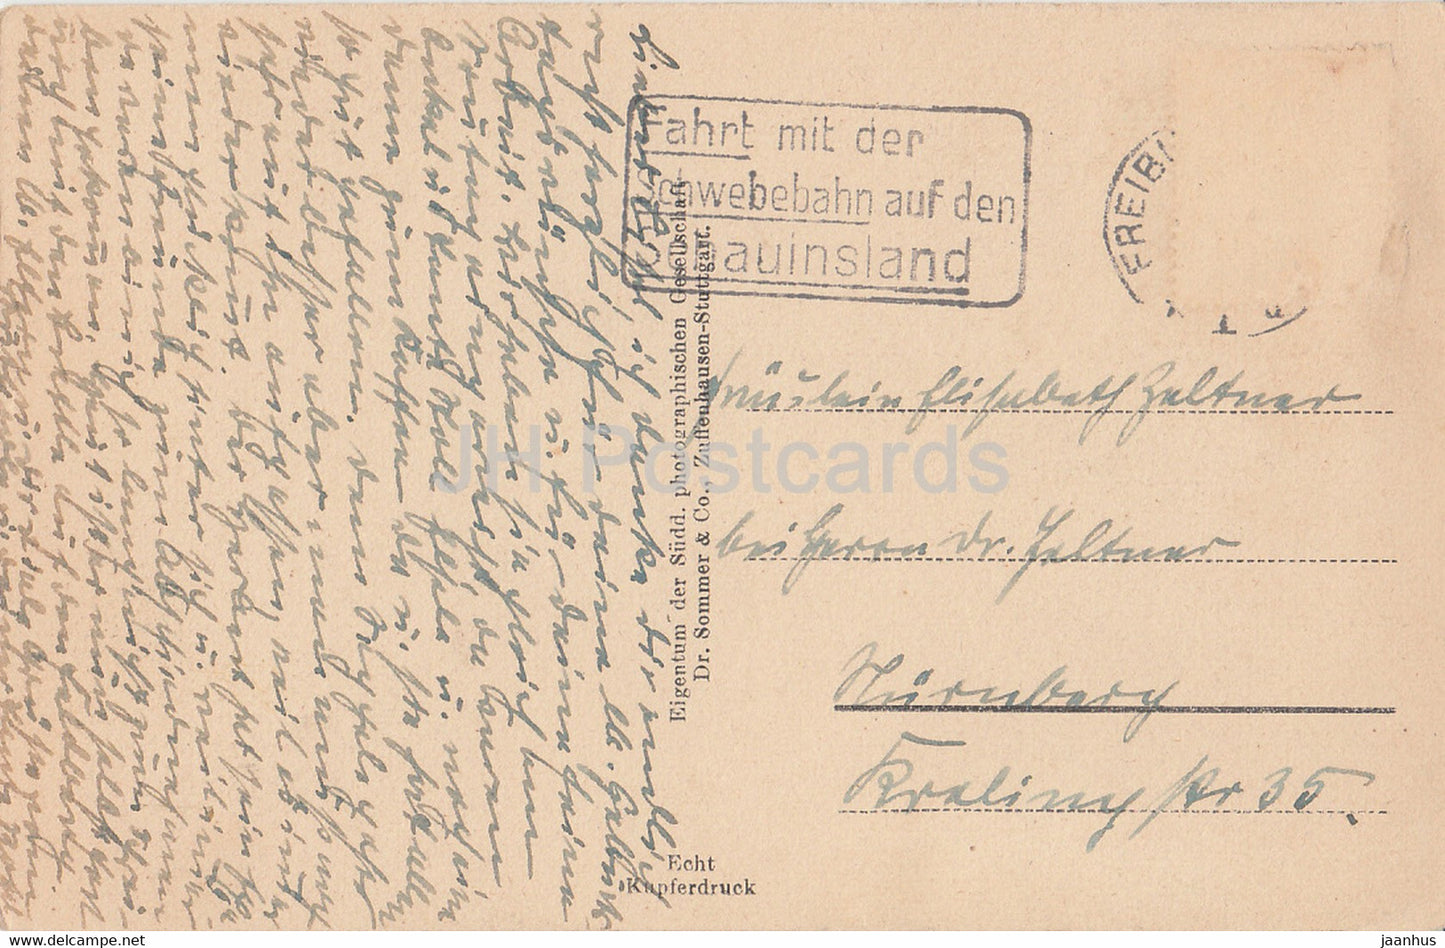 Freiburg i Br - 2606 - old postcard - Germany - used